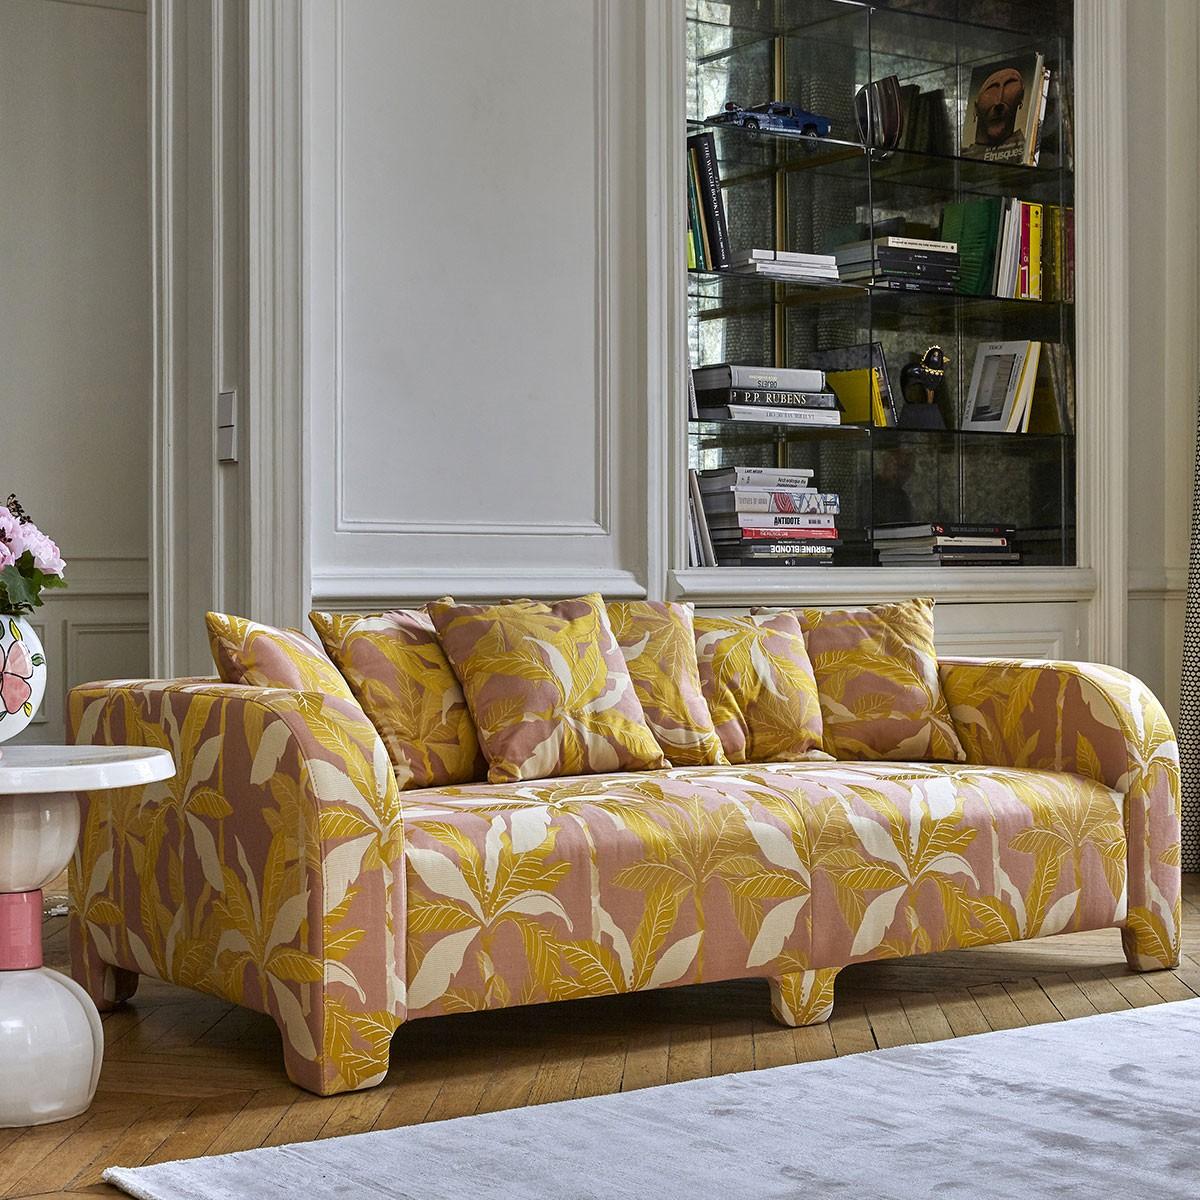 Popus Editions Graziella 4 Seater Sofa in Marine London Linen Fabric In New Condition For Sale In Paris, FR